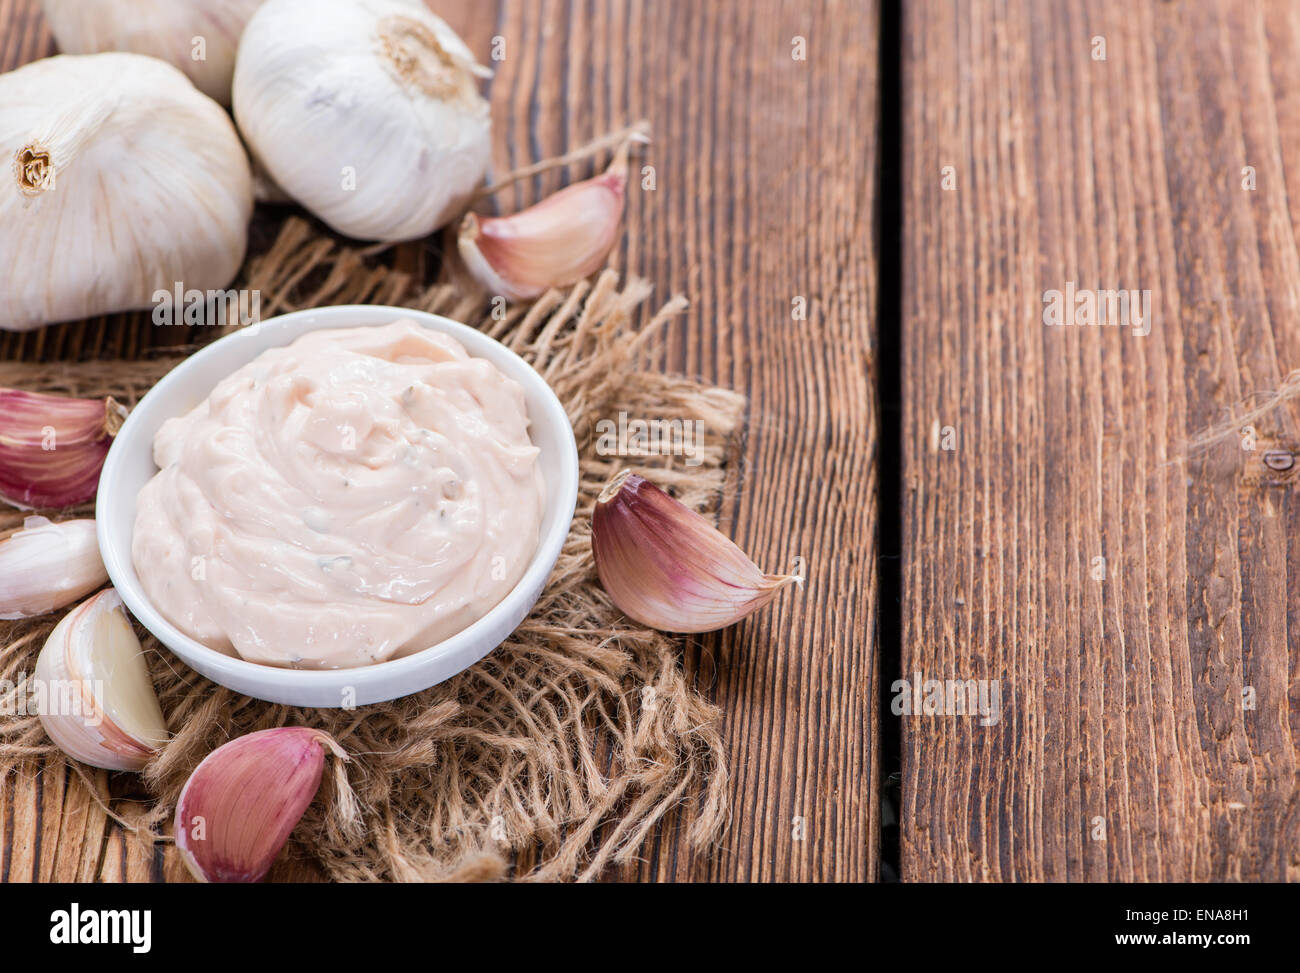 Fresh made Aioli (Garlic dip) on wooden background Stock Photo